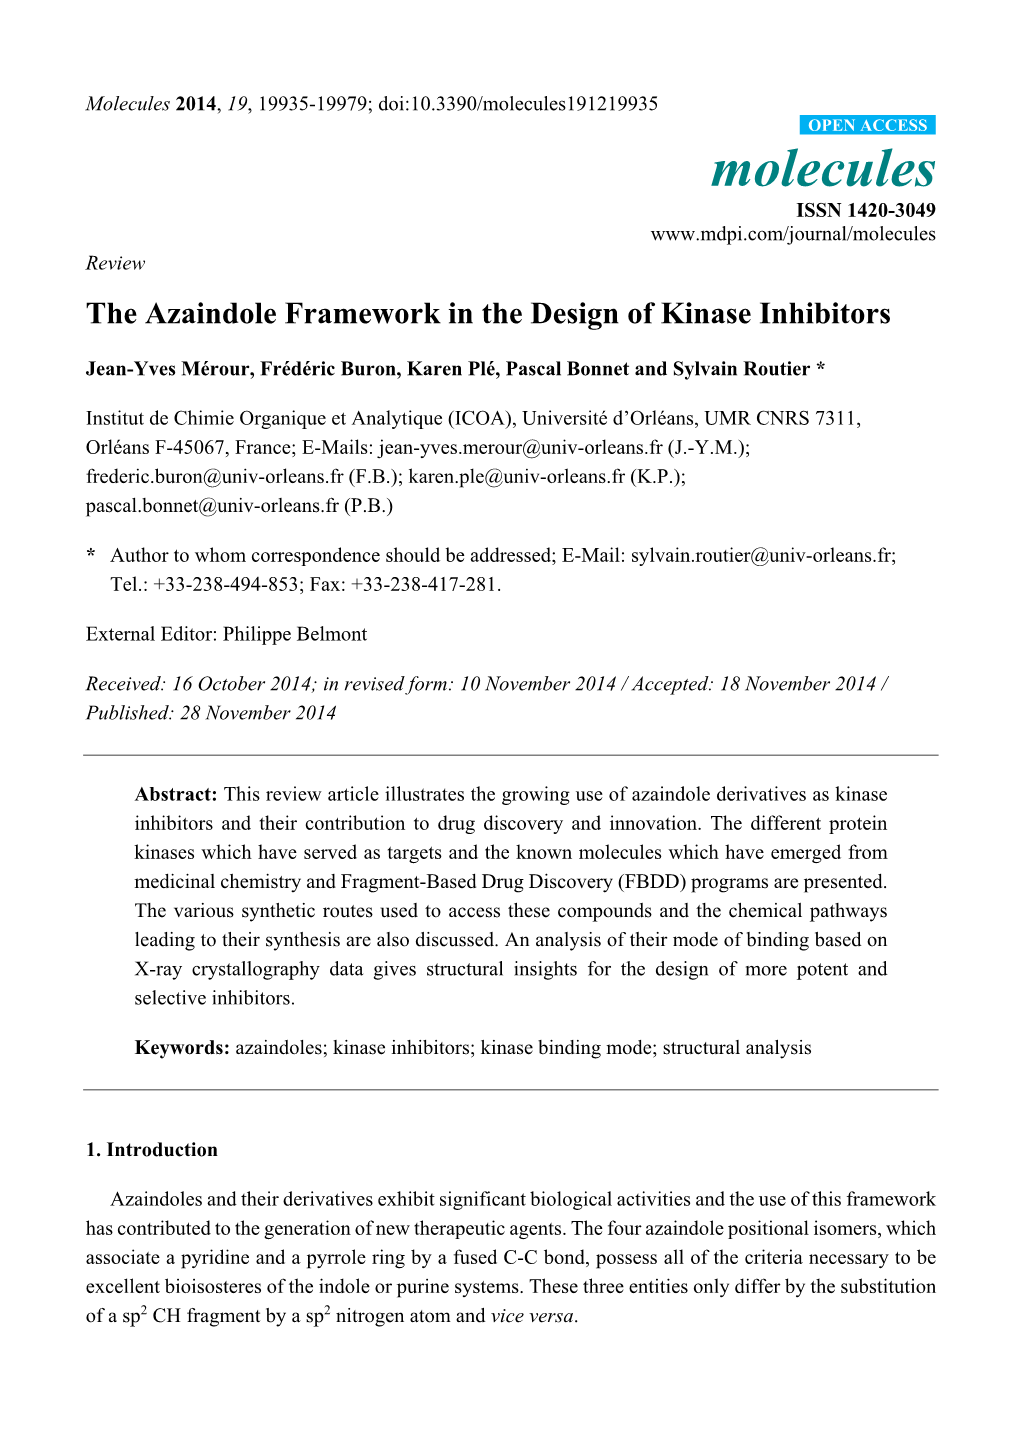 The Azaindole Framework in the Design of Kinase Inhibitors